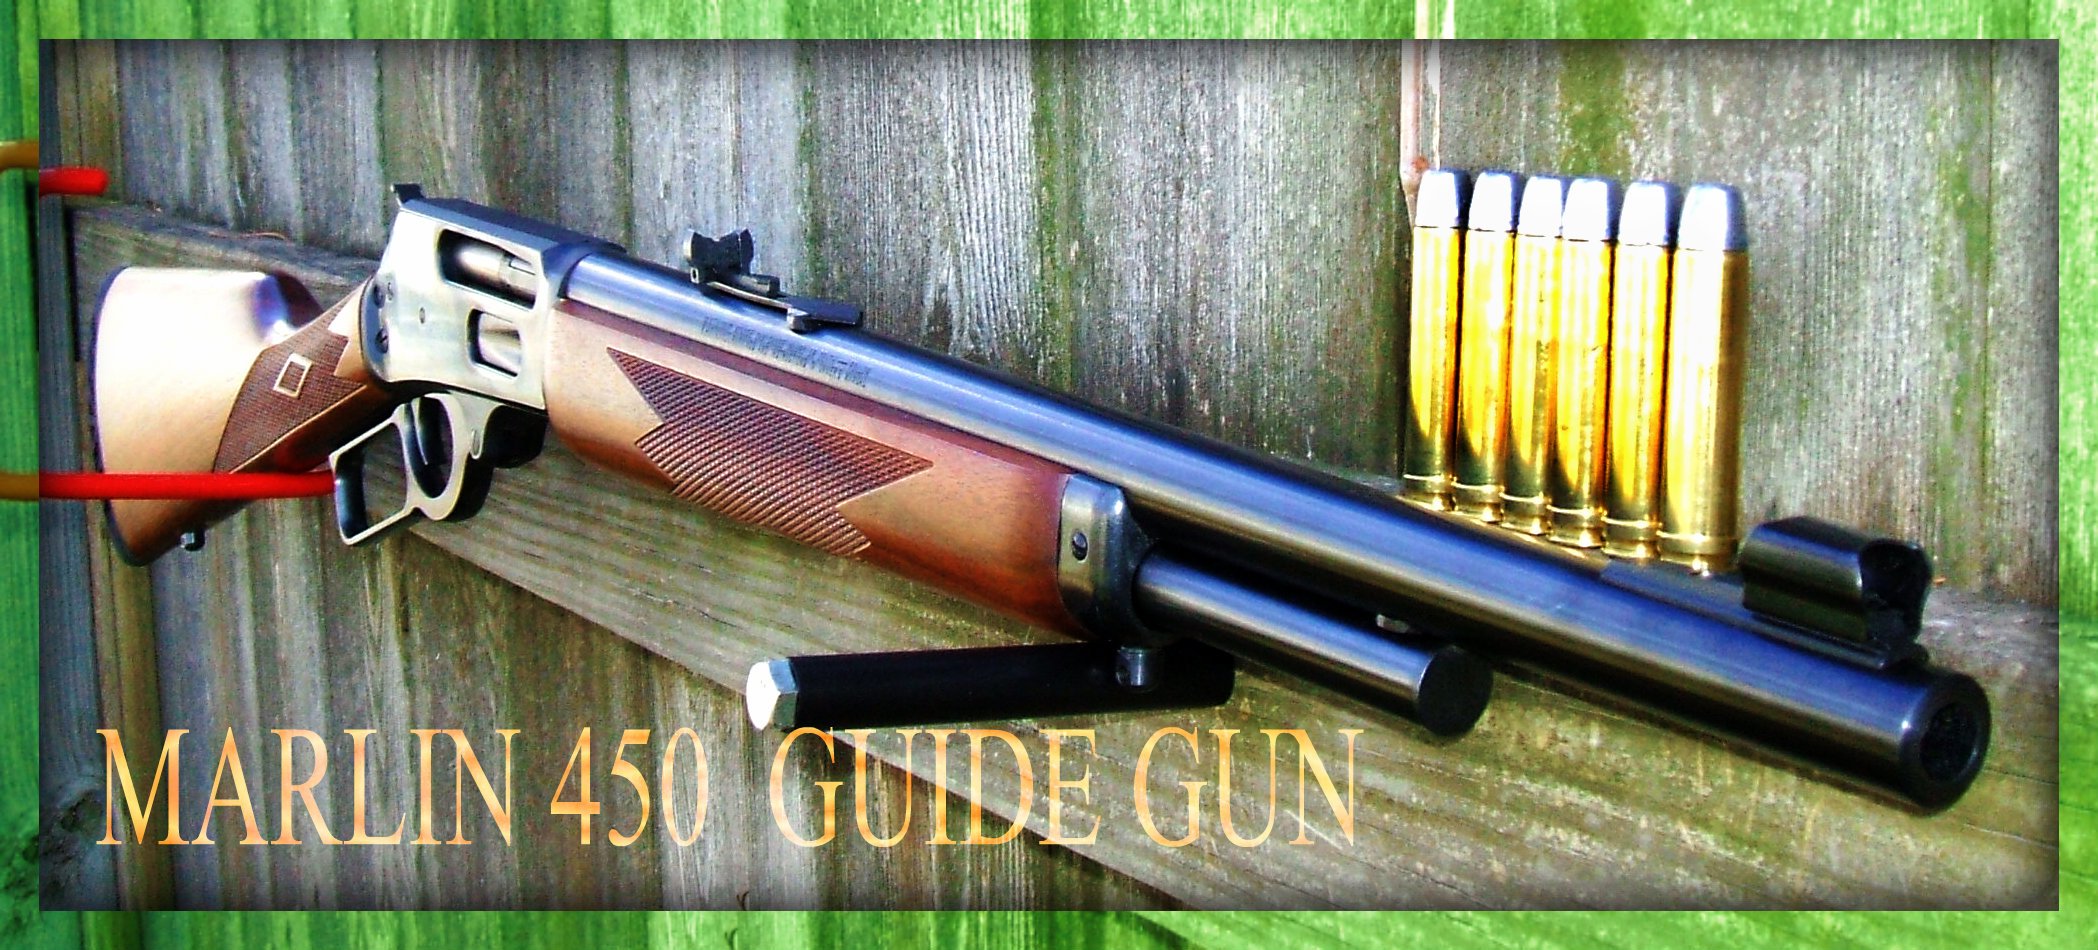 Marlin Hunting Rifle Weapon Gun Wallpaper